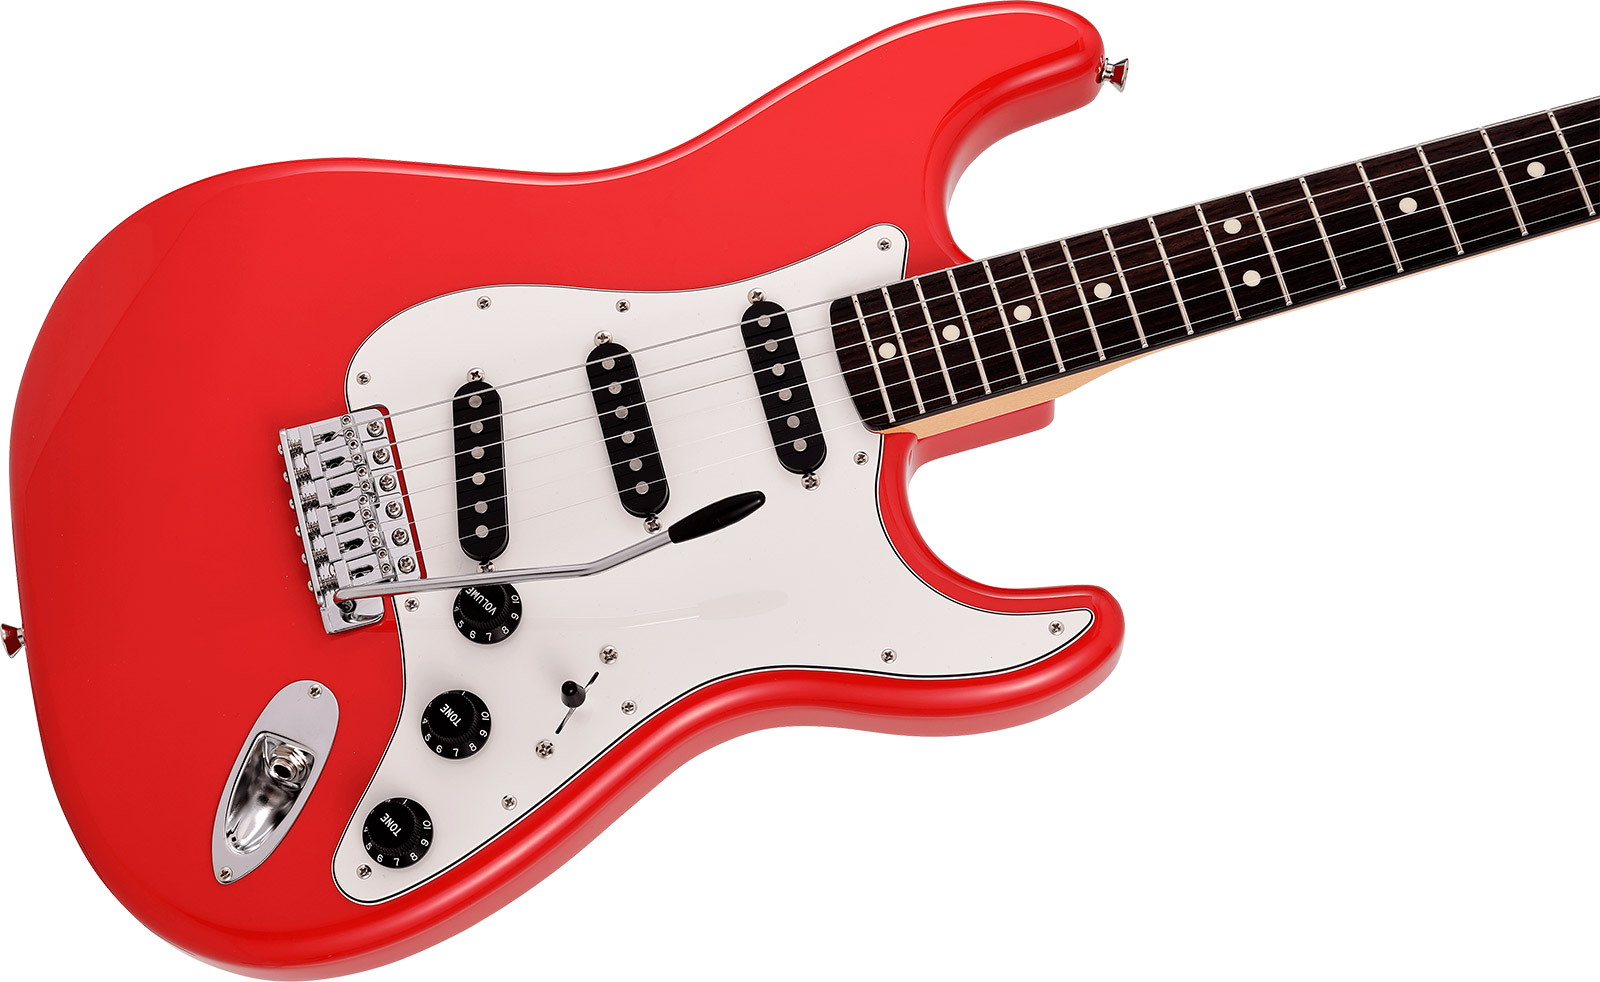 Fender Strat International Color Ltd Jap 3s Trem Rw - Morocco Red - Guitarra eléctrica con forma de str. - Variation 2